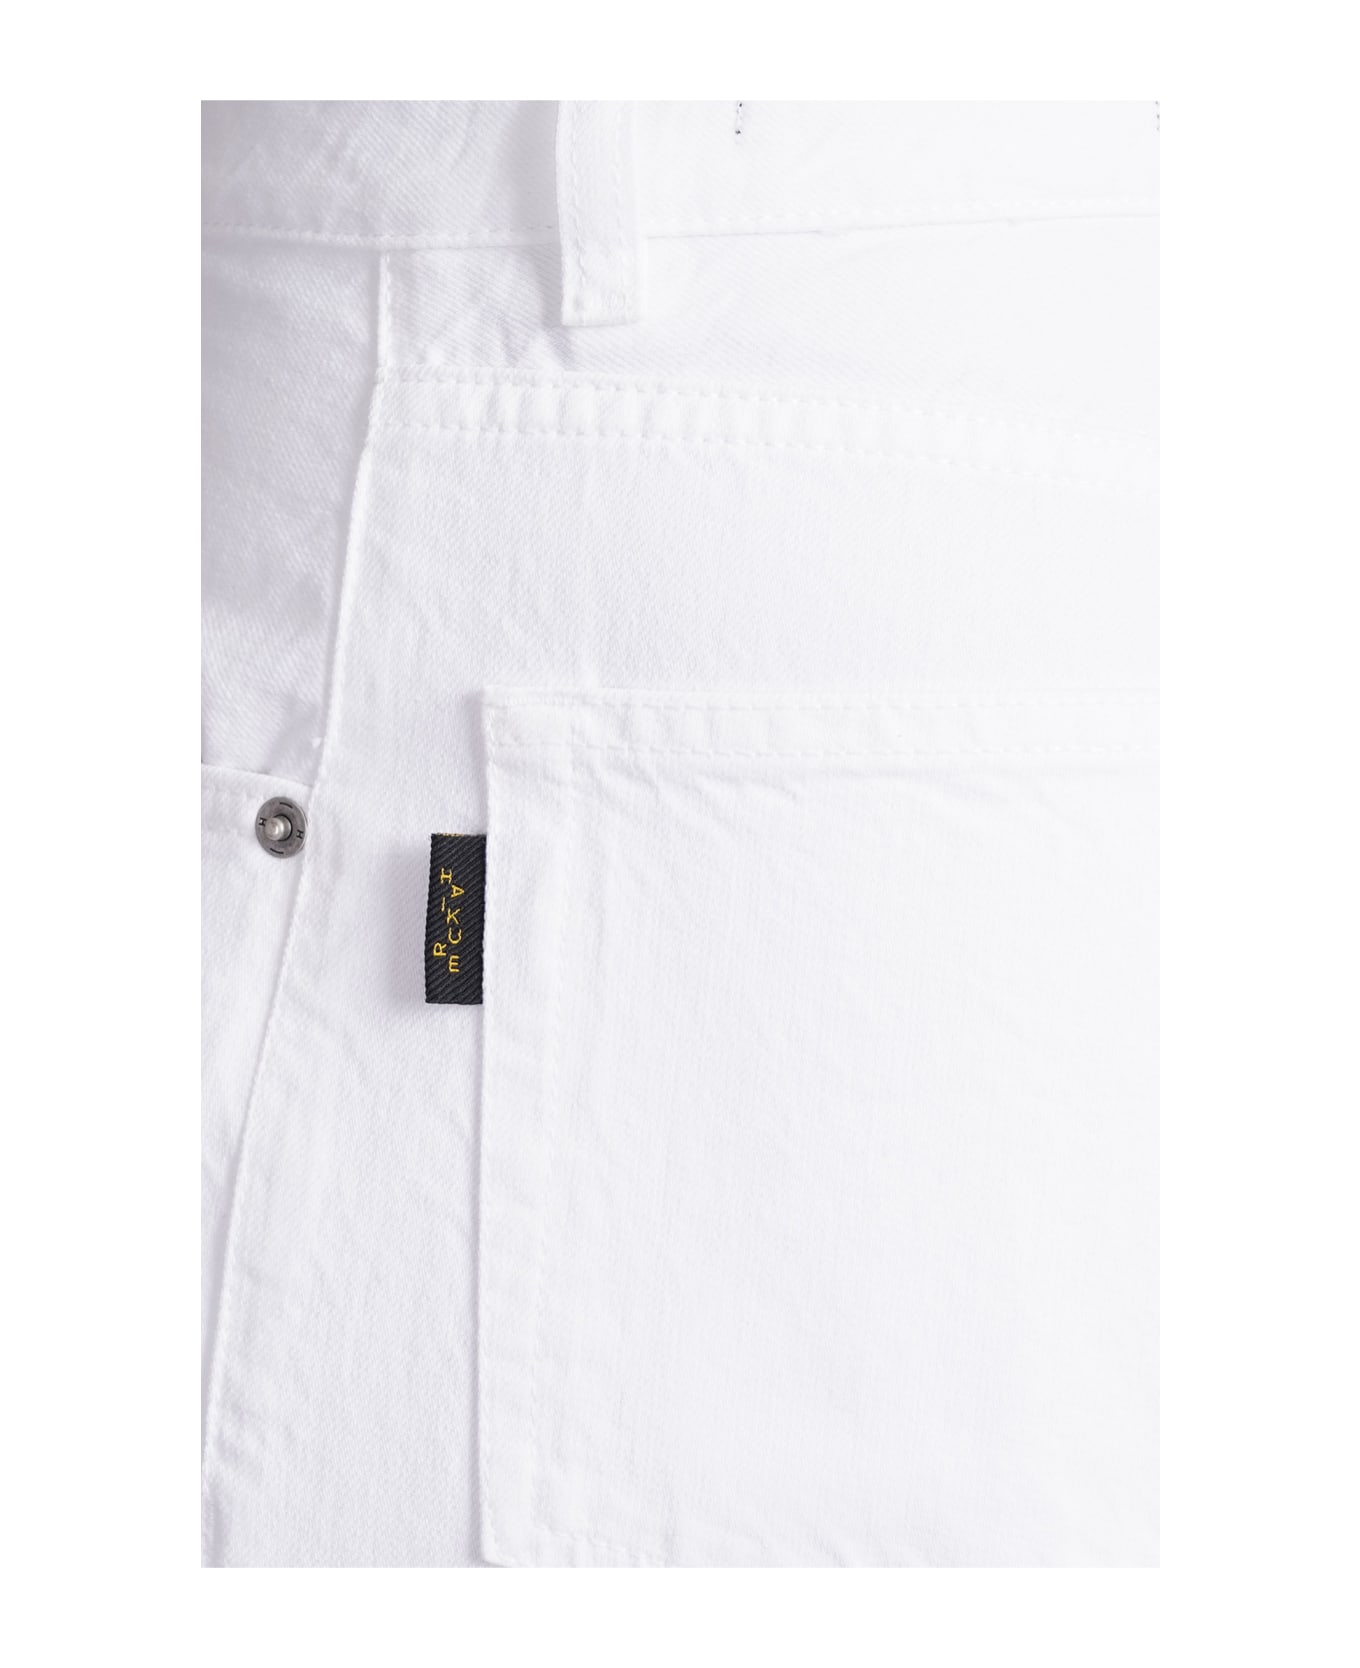 Haikure Bethany Jeans In White Cotton - white